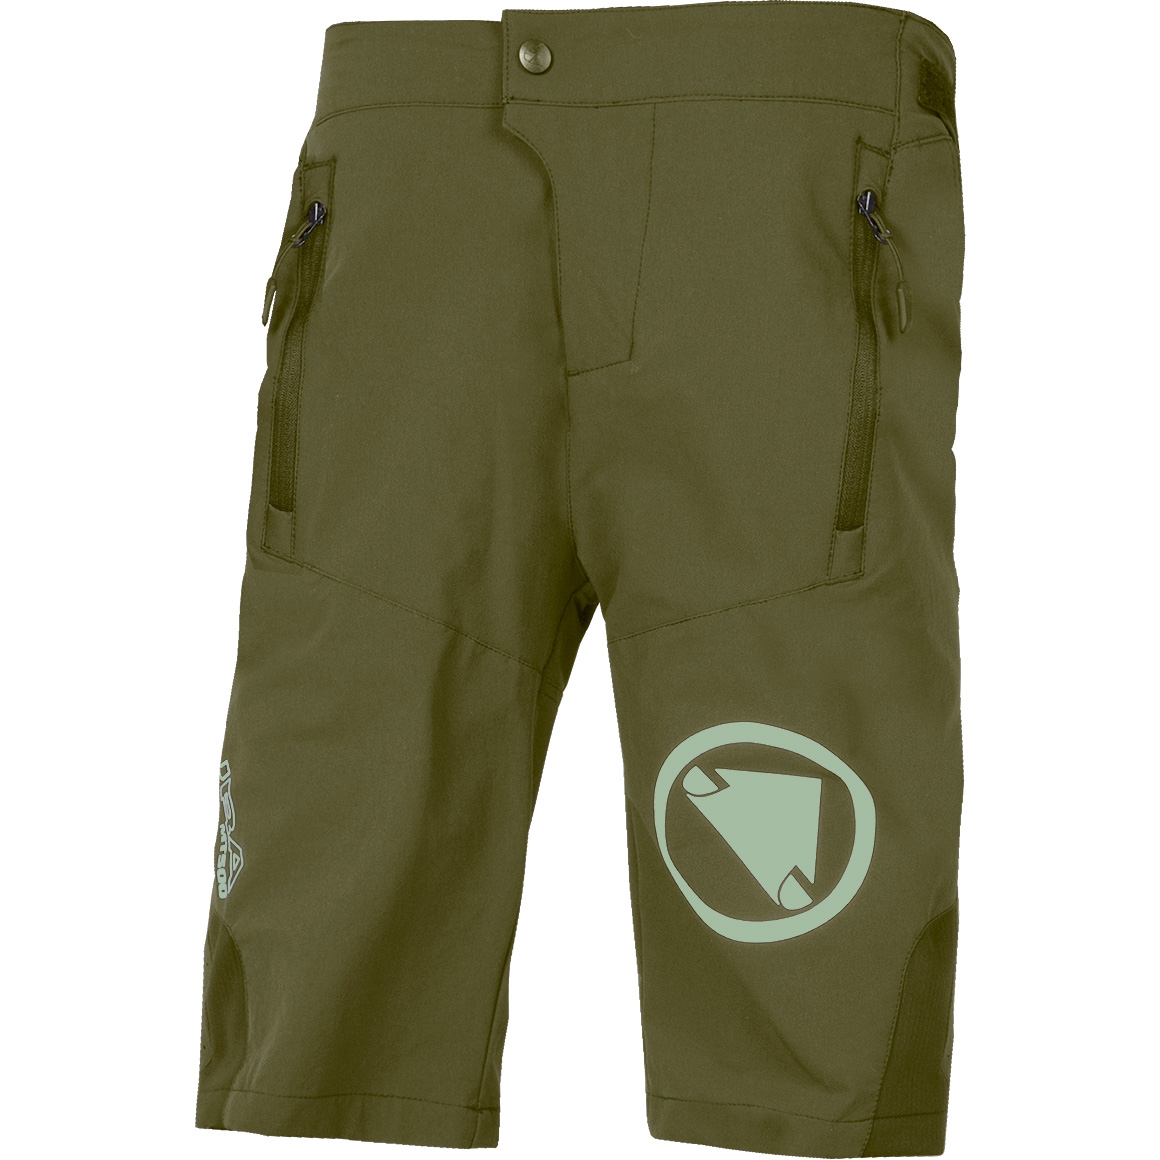 Produktbild von Endura MT500JR Burner Kinder Shorts - olivgrün